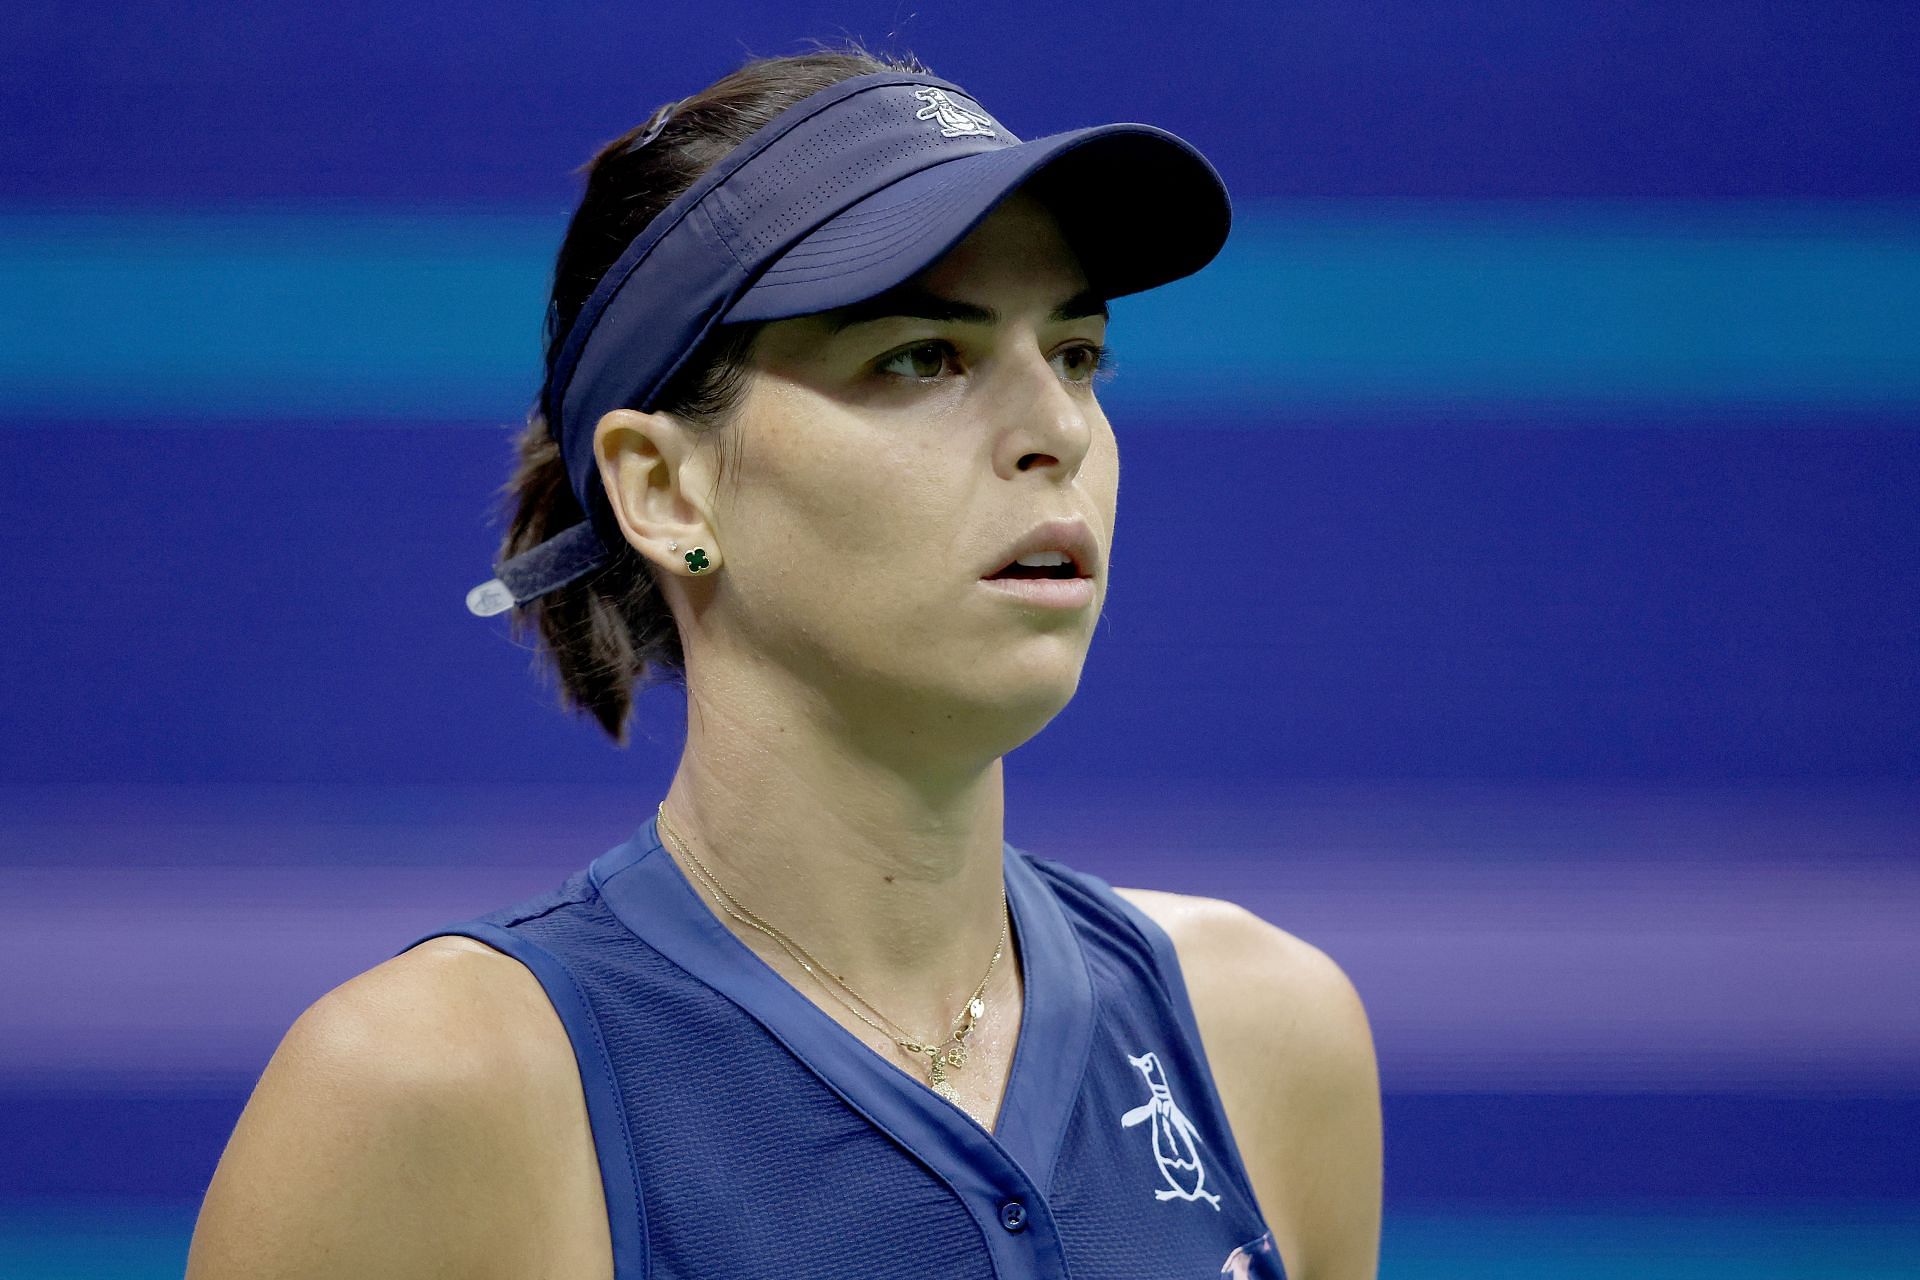 Ajla Tomljanovic at the 2022 US Open